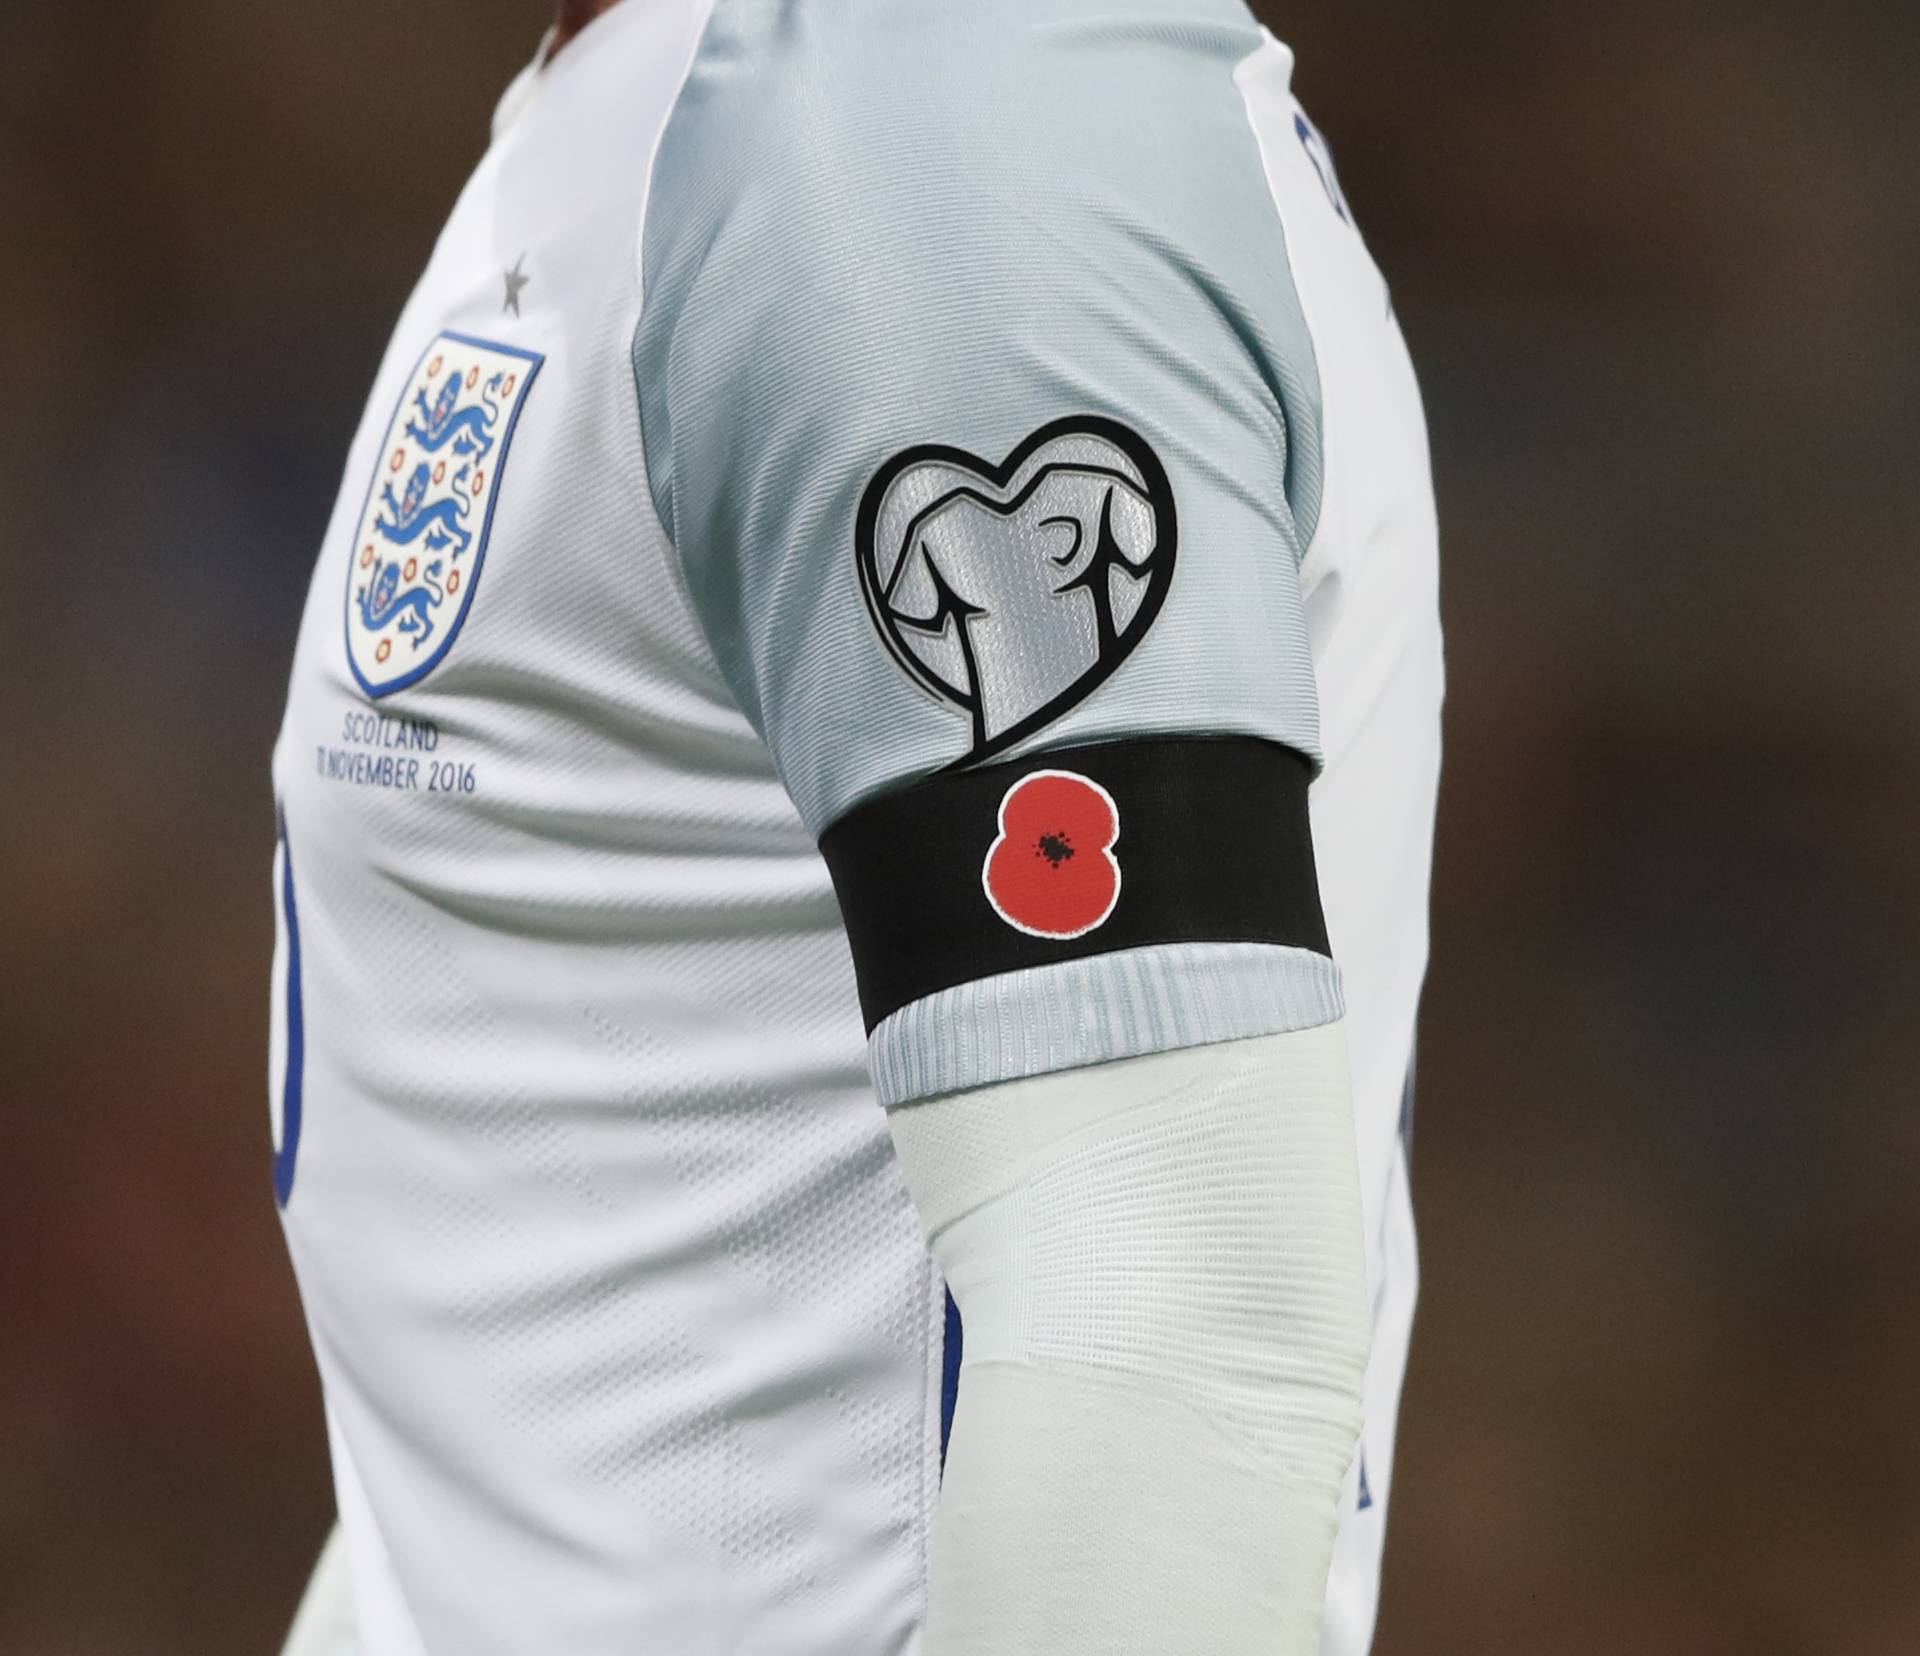 A poppy armband on England's Wayne Rooney